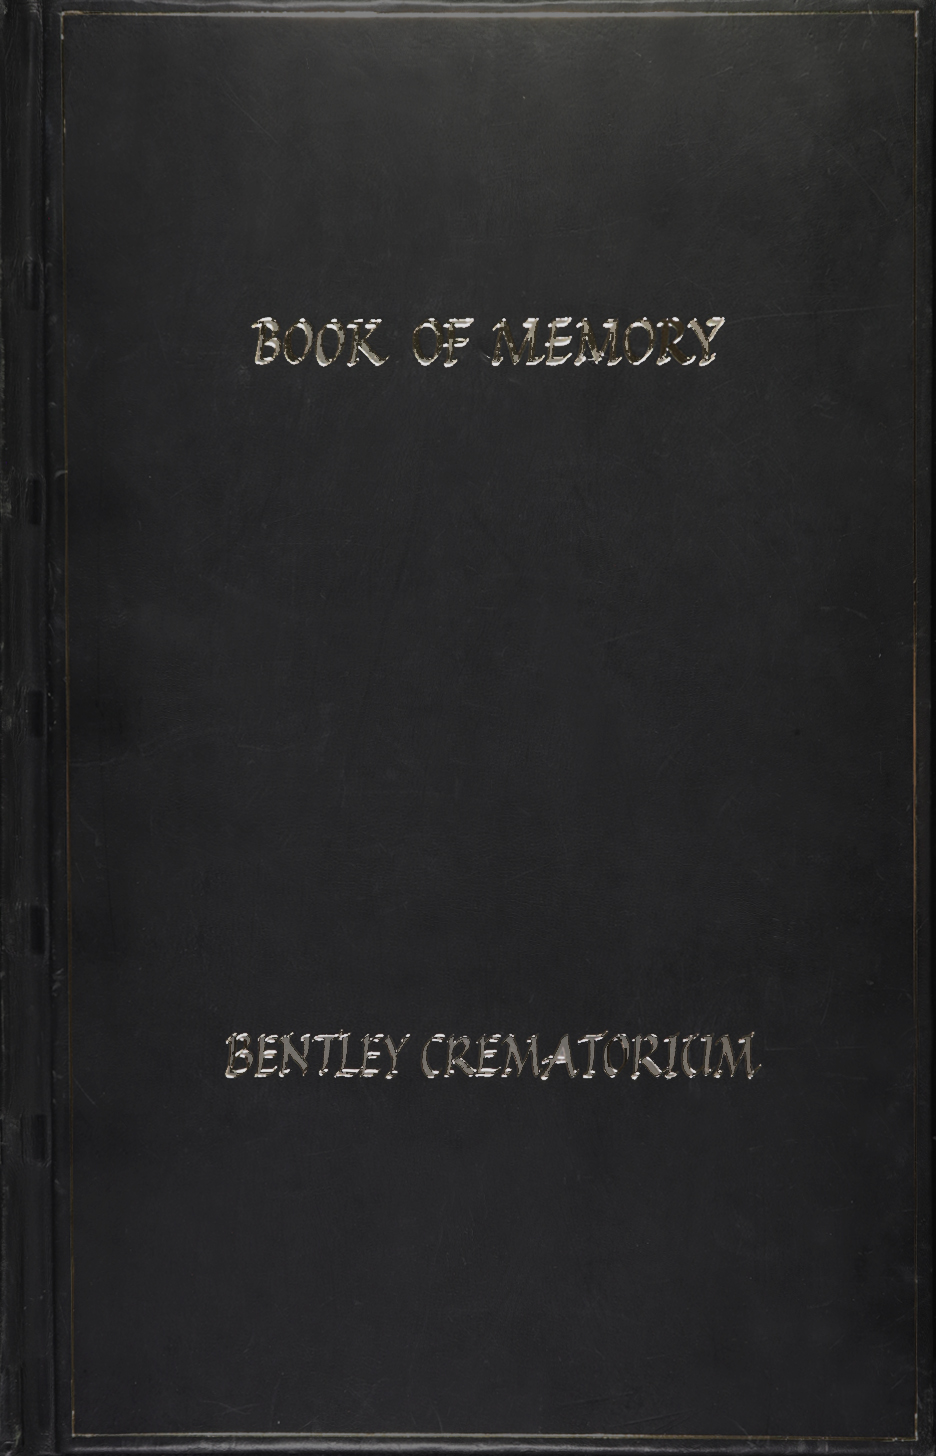 Bentley Crematorium's Book of Remembrance